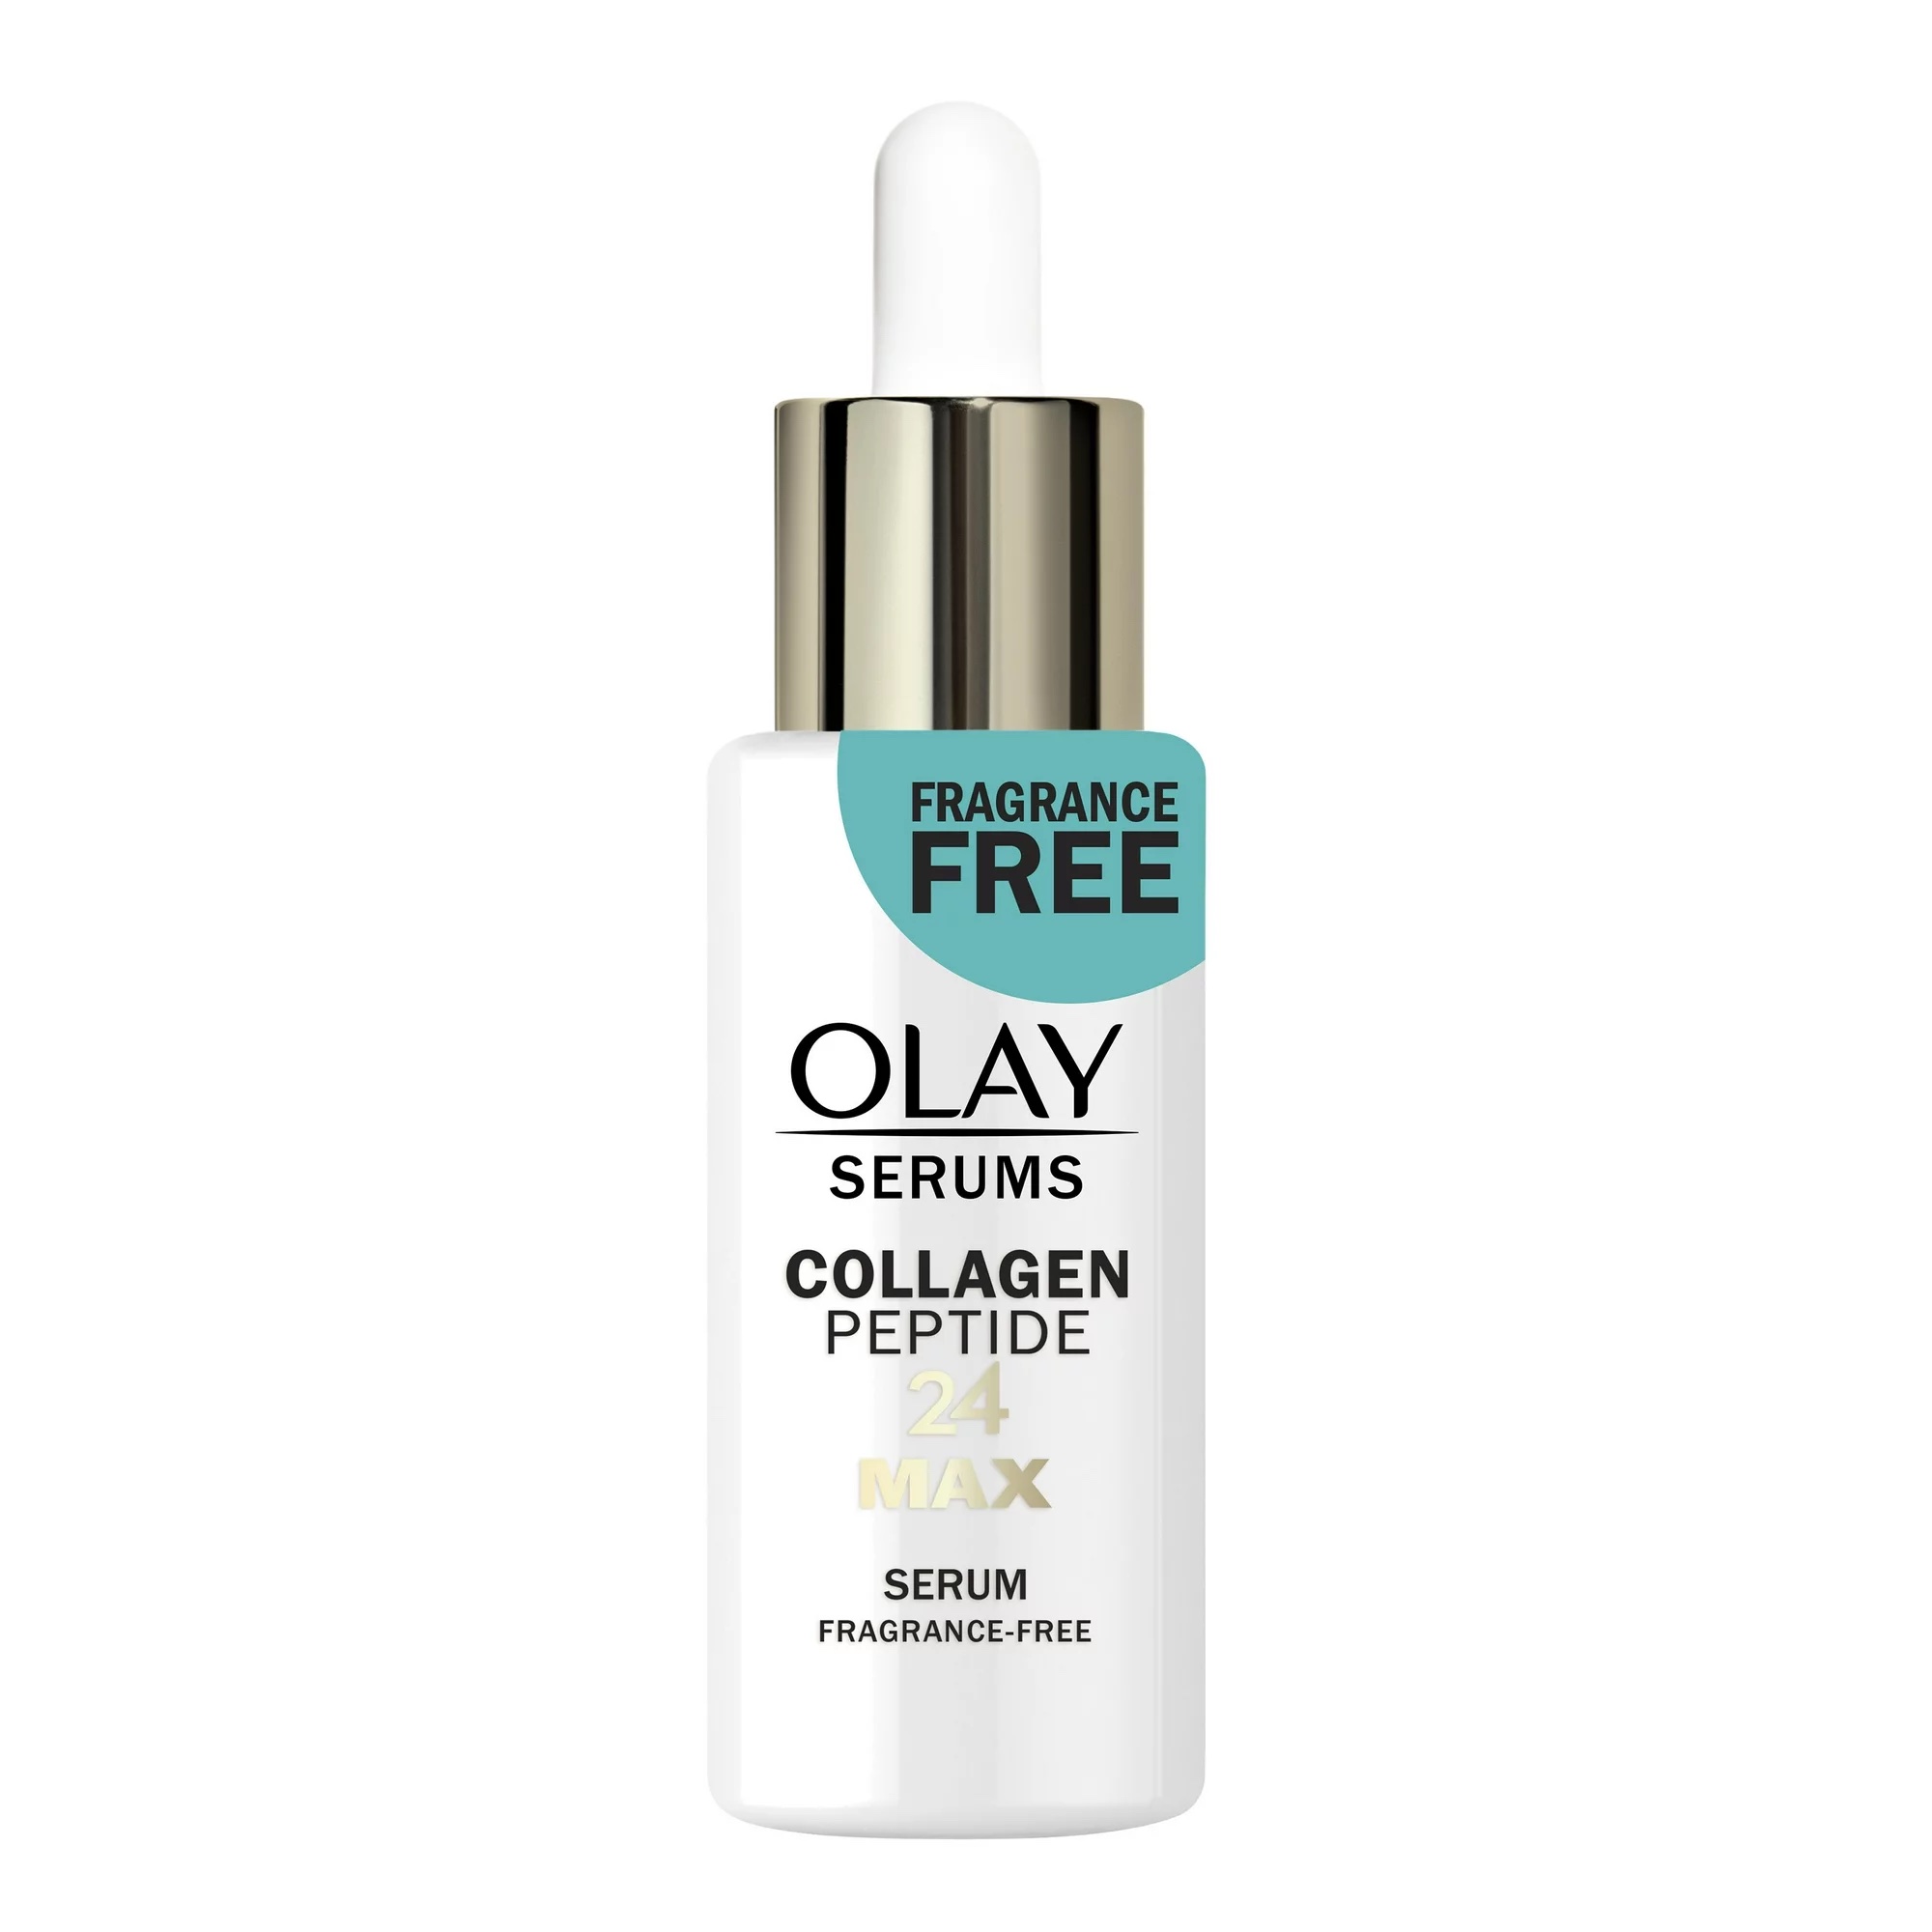 Olay Collagen Peptide 24 MAX Soro sem fragrância